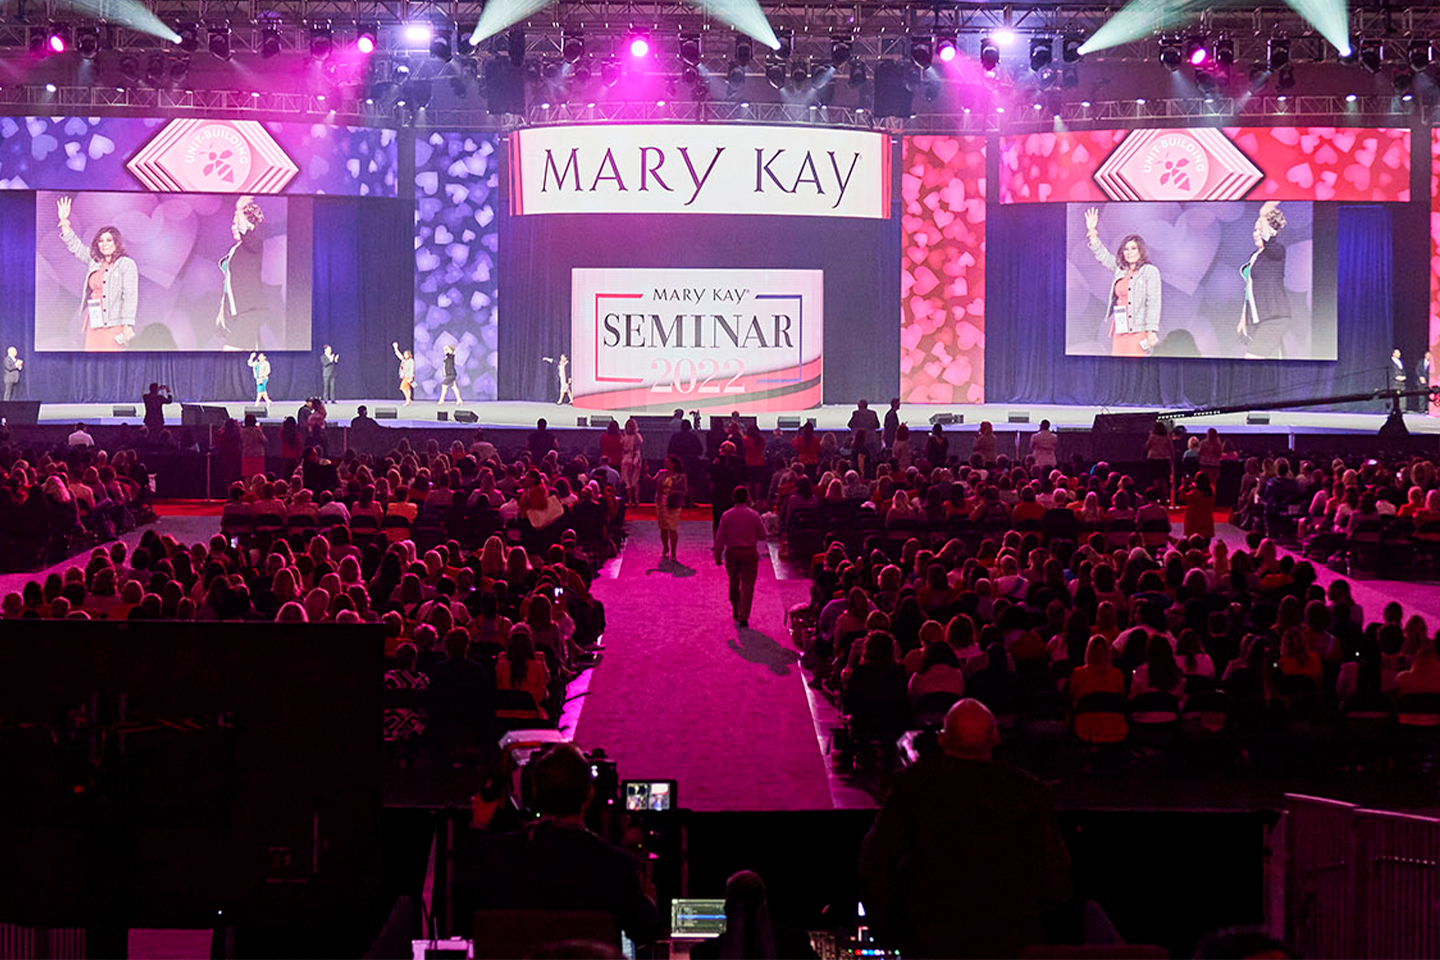 Konferensi Mary Kay dengan orang-orang berjalan melintasi panggung